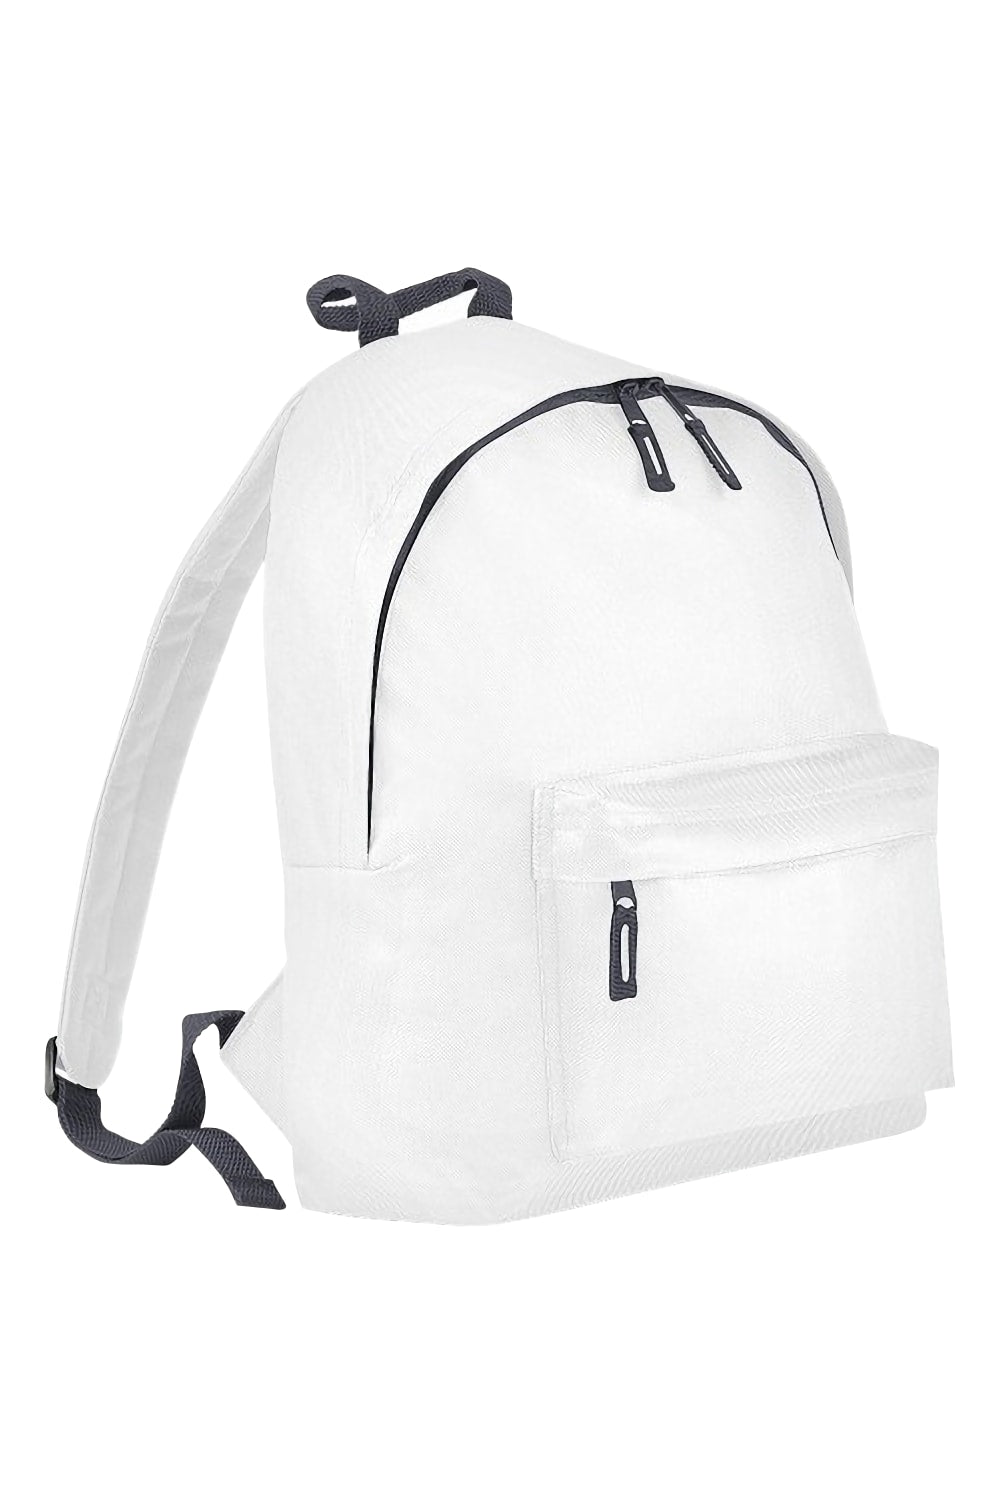 Junior Fashion Backpack / Rucksack (14 Liters) (Pack of 2) (White/Graphite)